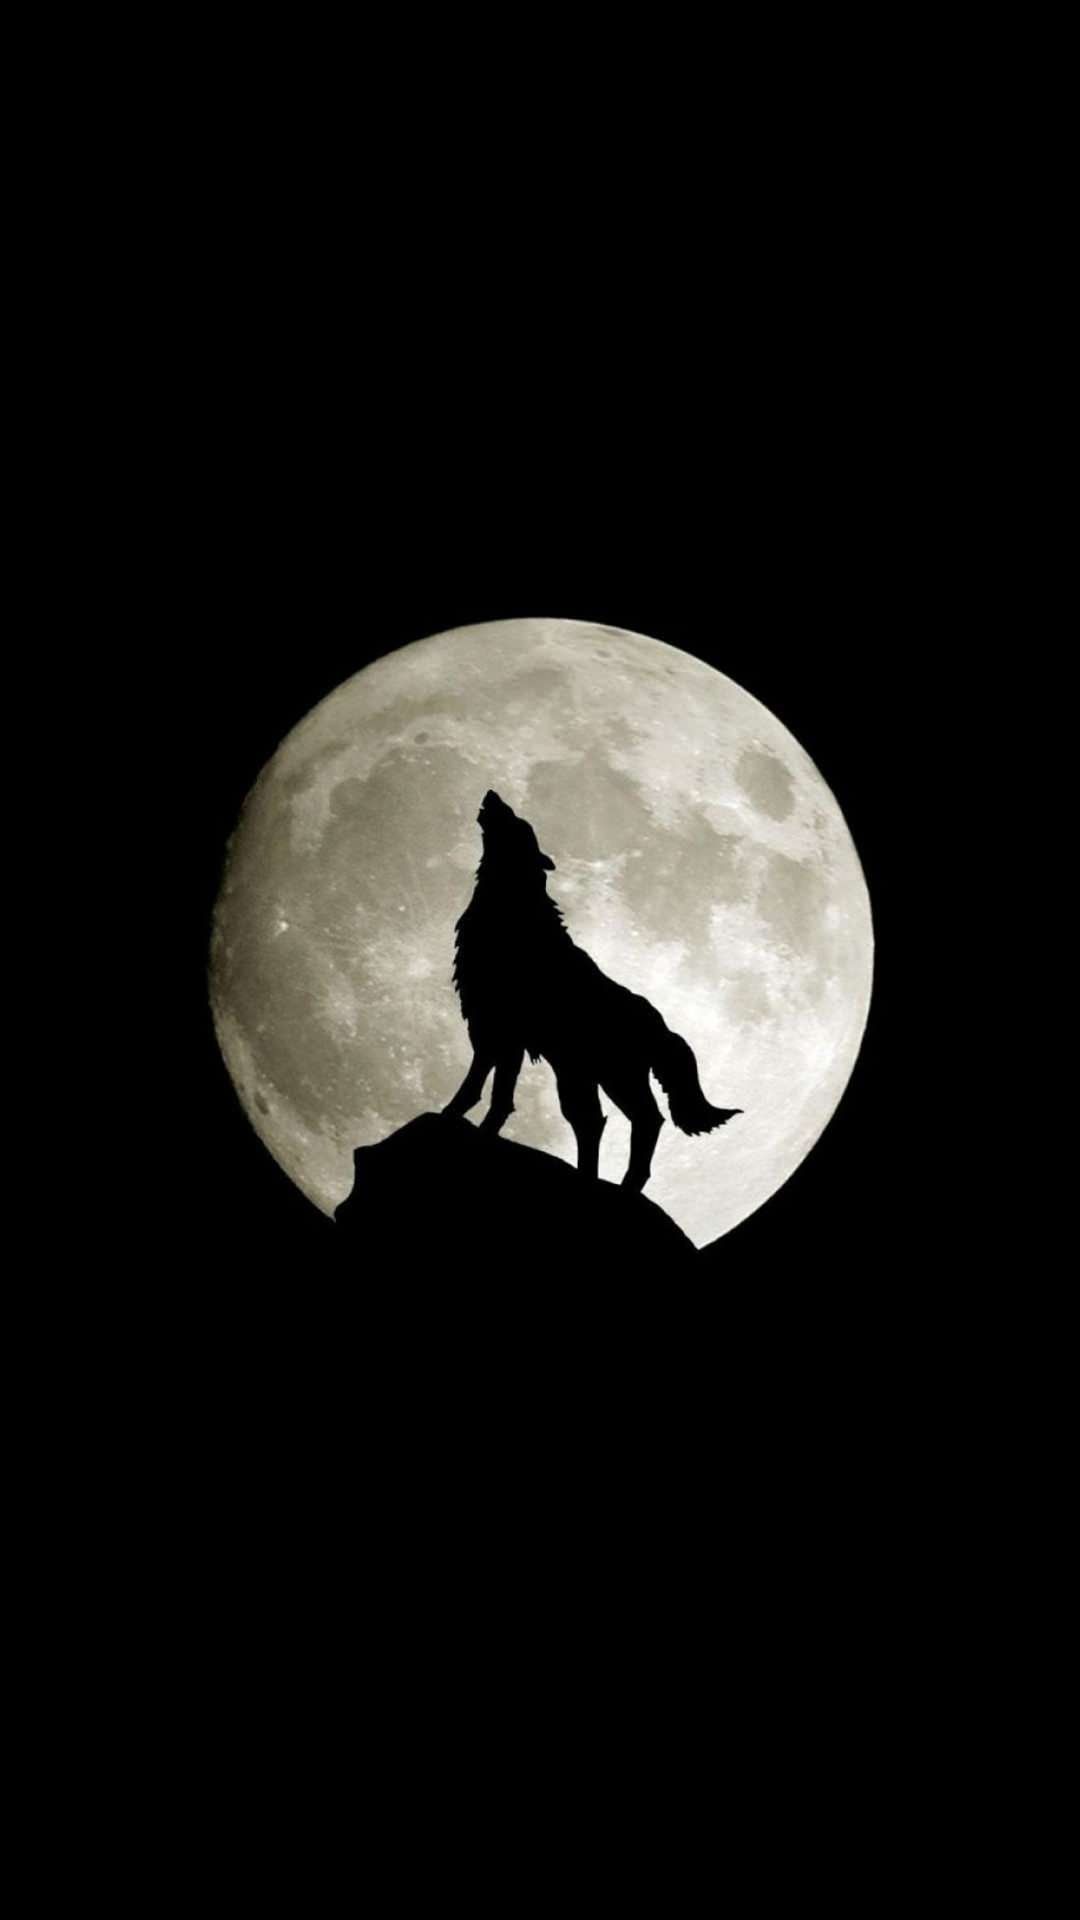 Amoled Wallpaper 10. Wolf wallpaper, Wolf moon, Wolf image